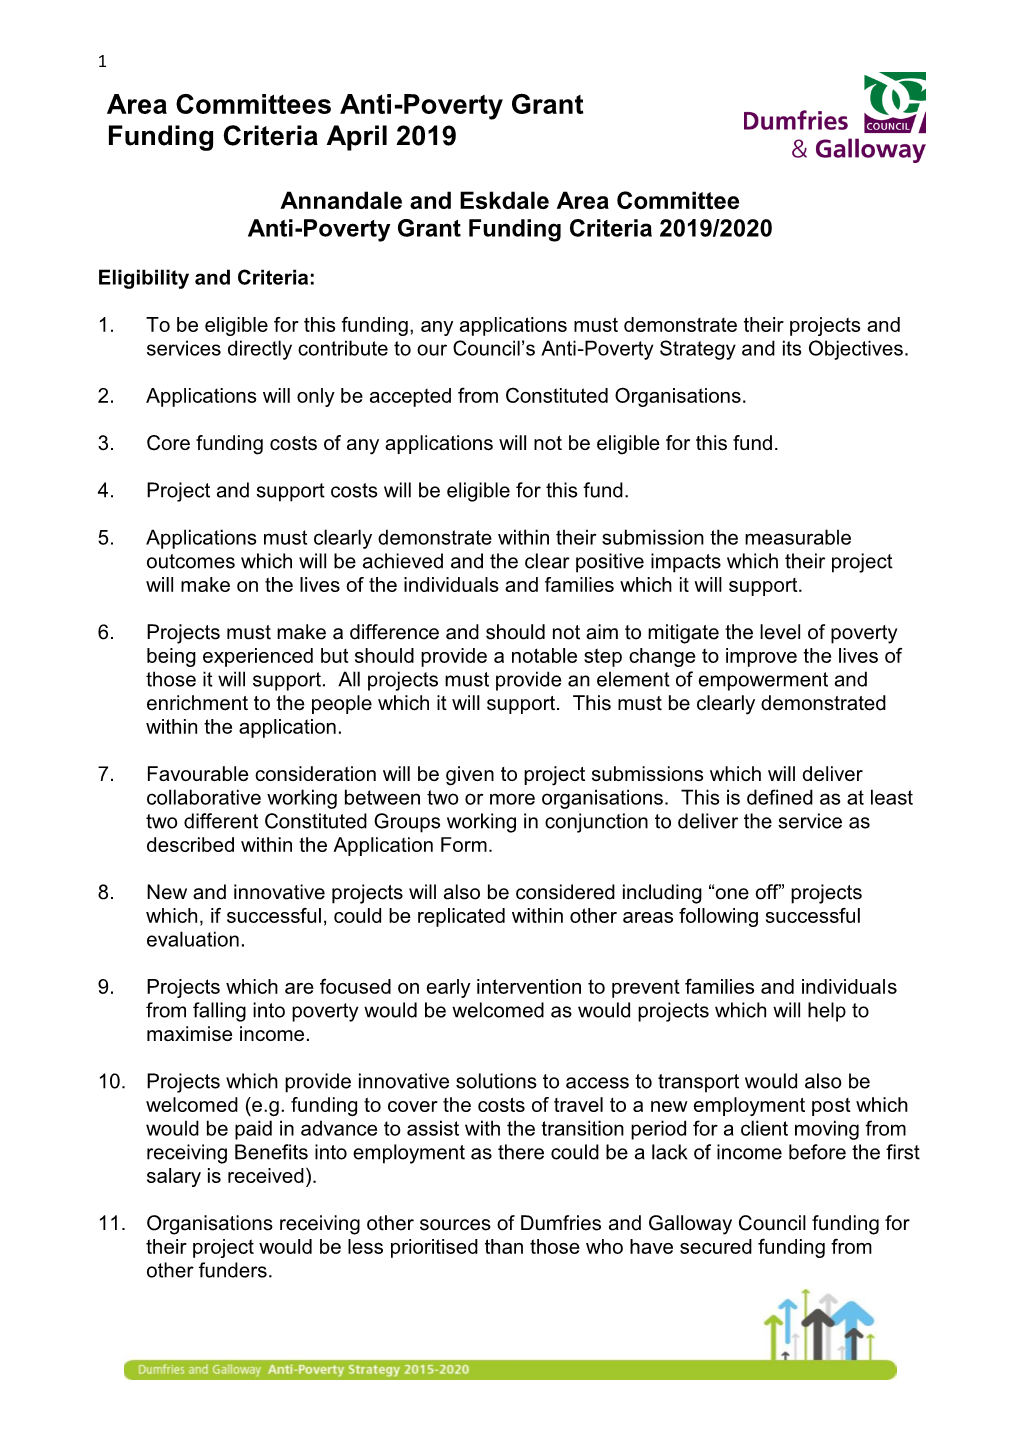 Area Committees Anti-Poverty Grant Funding Criteria April 2019